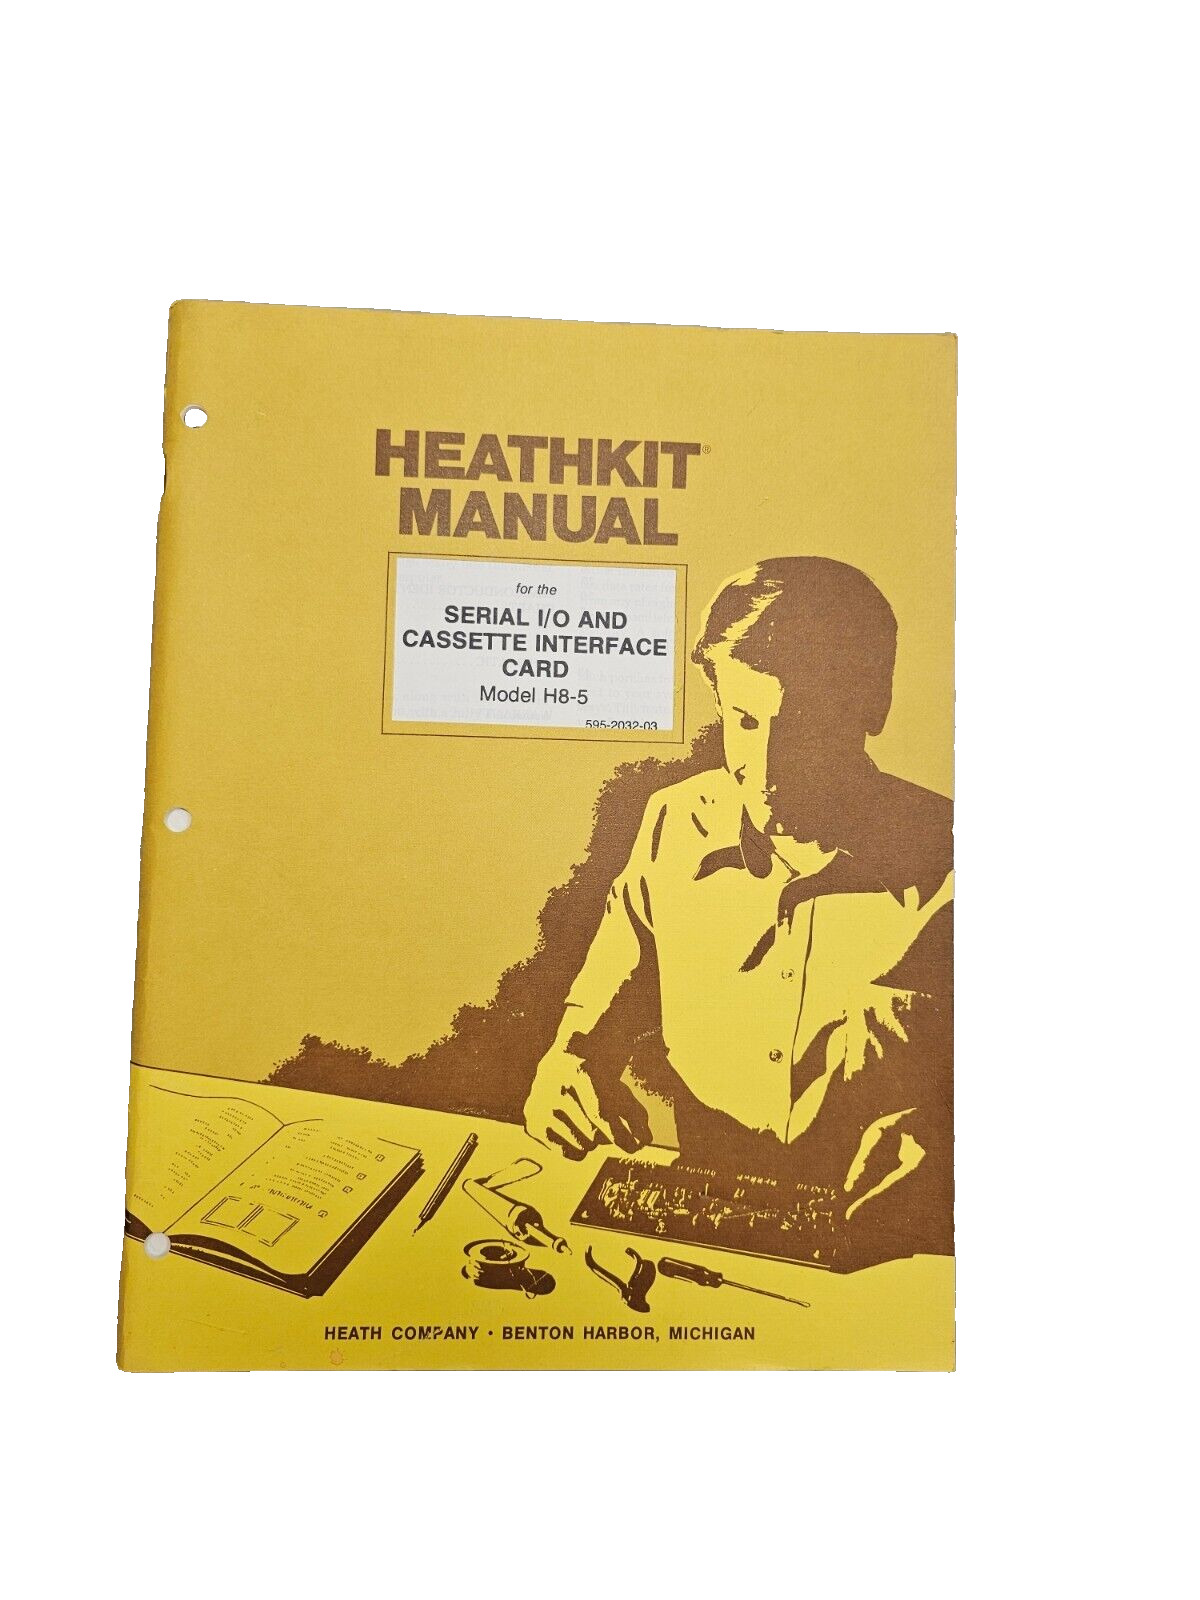 Vintage 70\'s Heathkit Manual Serial I/O Cassette Interface Card H8-5 595-2032-03